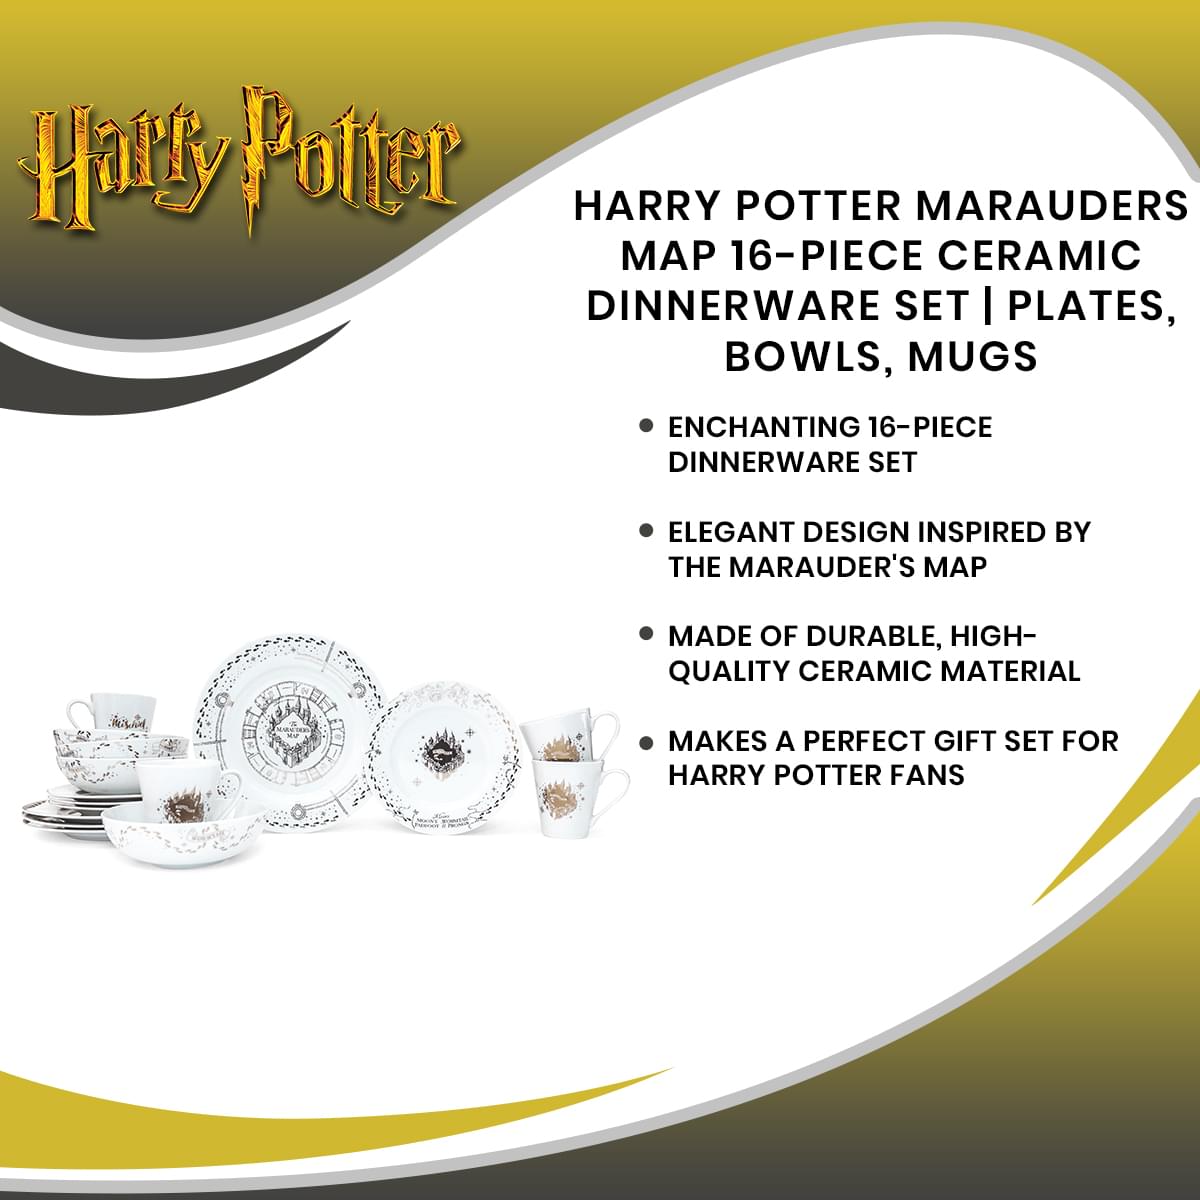 Harry Potter Marauders Map 16-Piece Ceramic Dinnerware Set | Plates, Bowls, Mugs